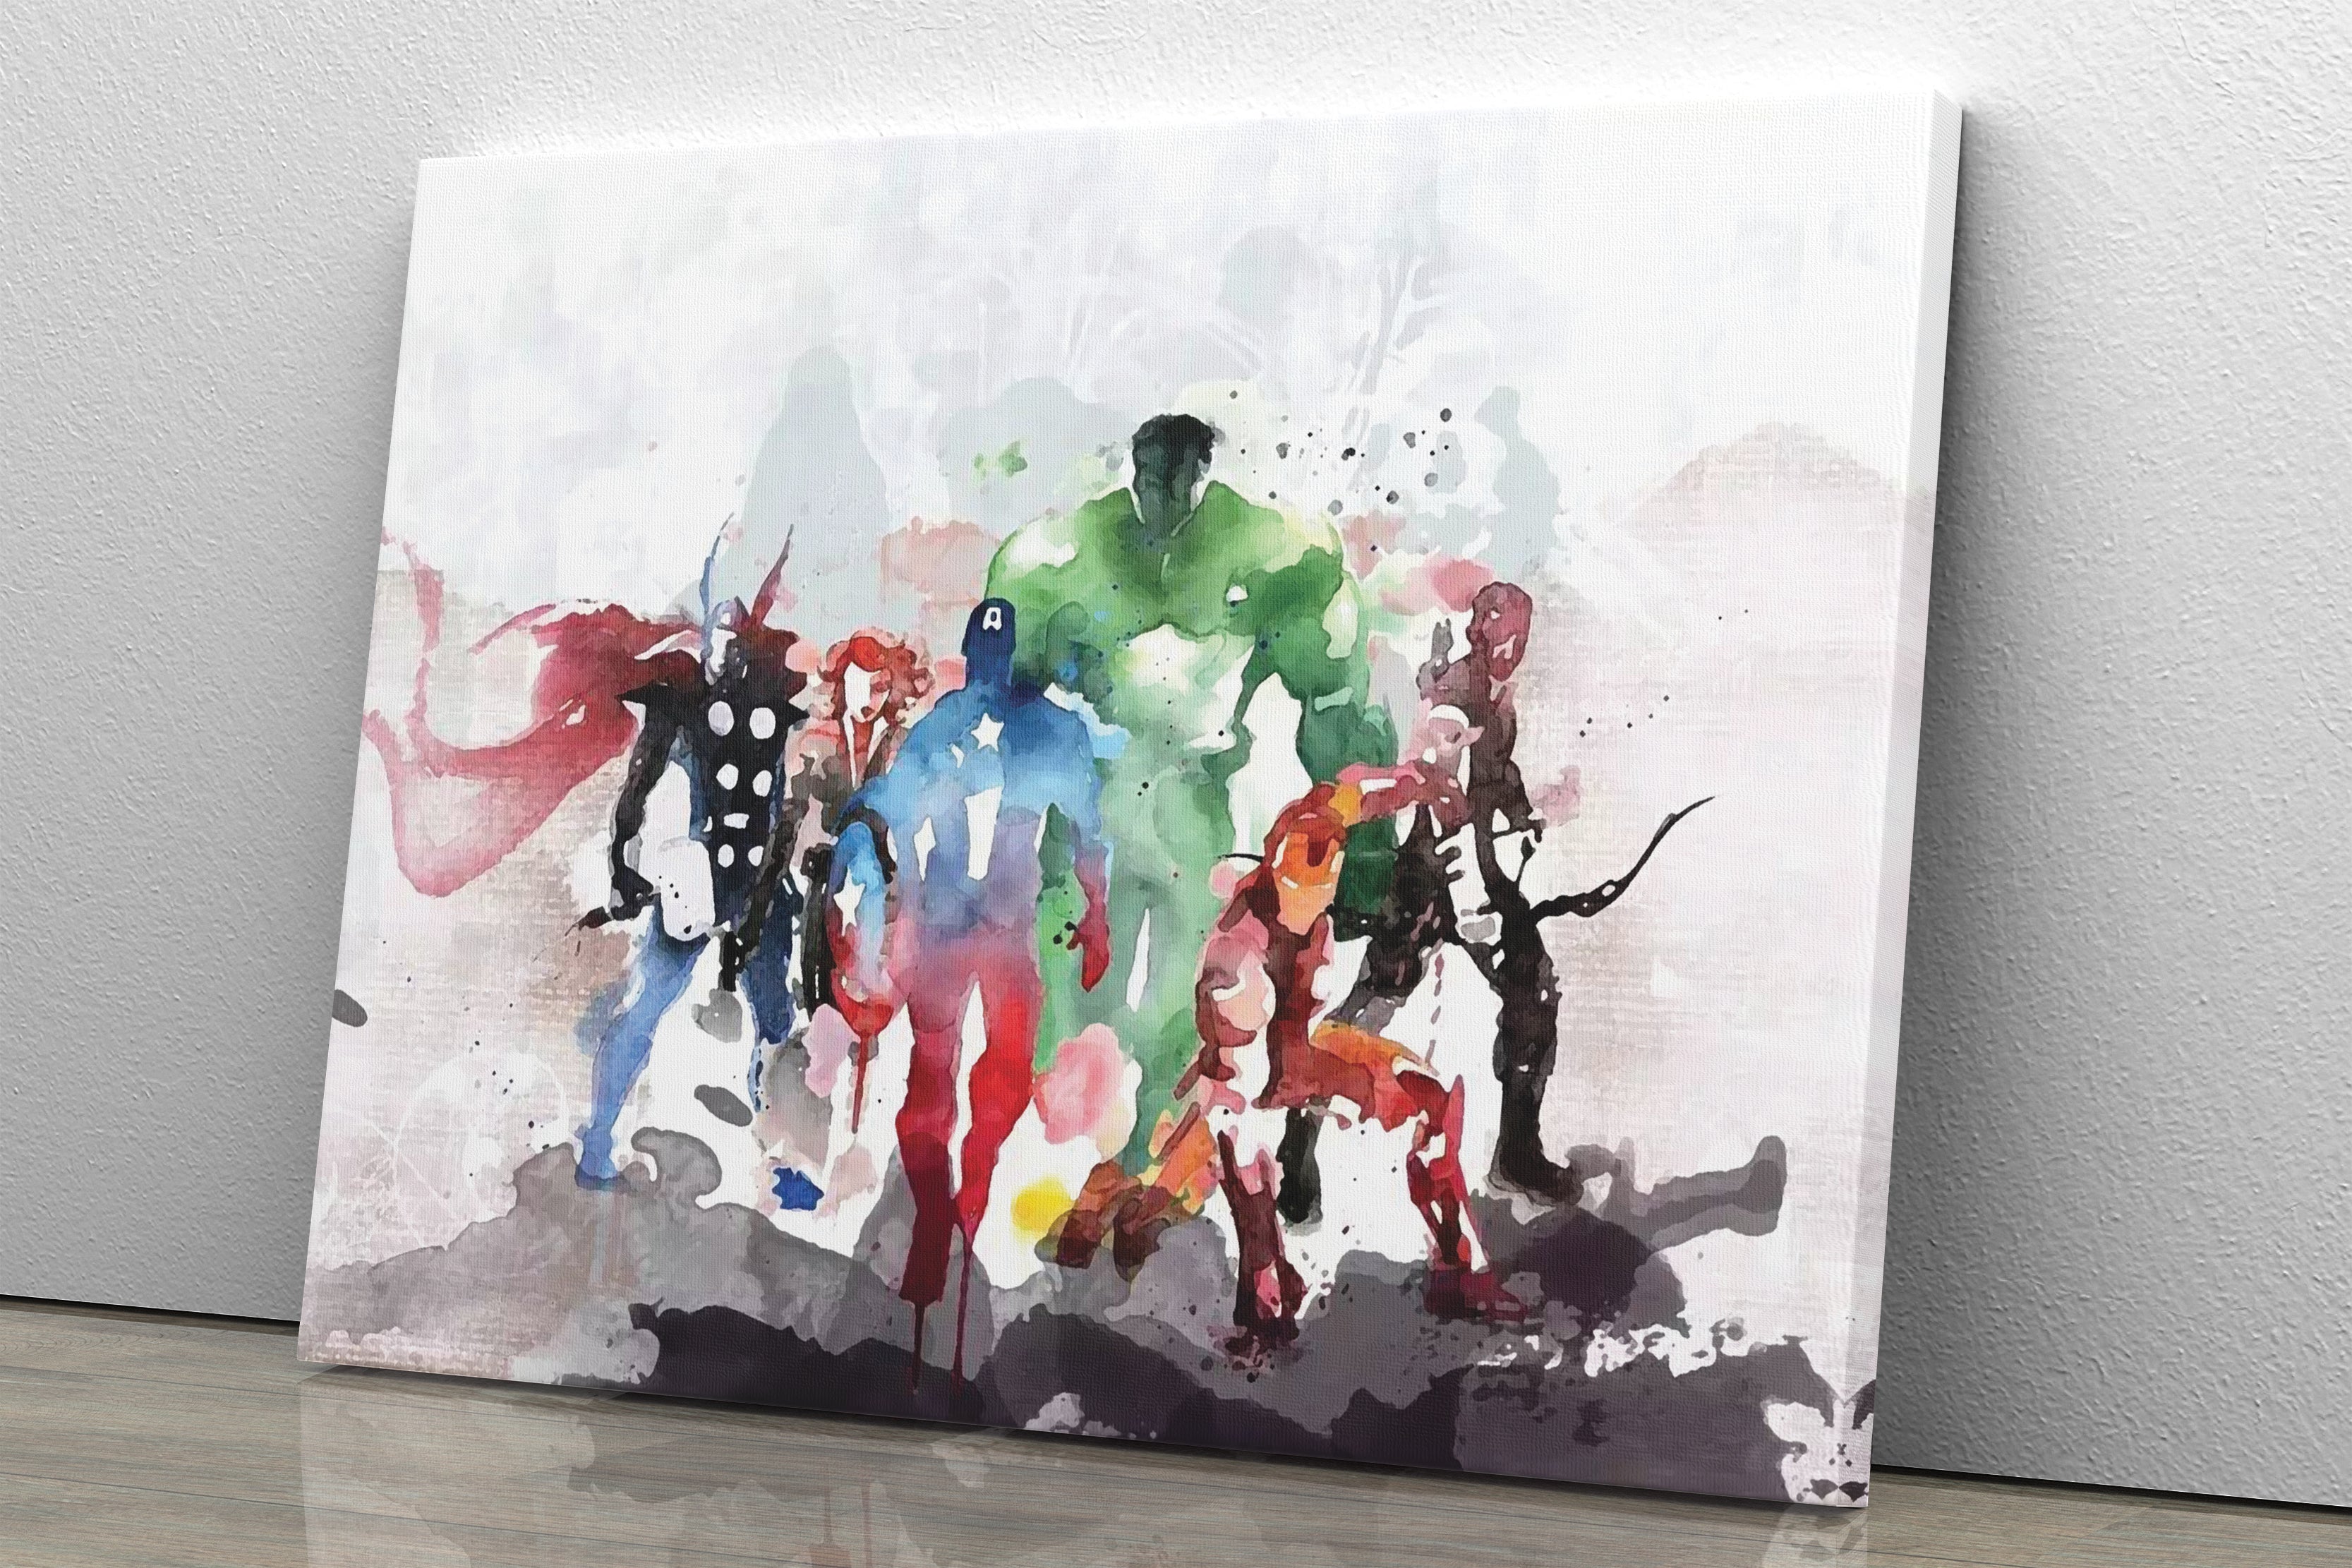 Marvel Posters: Superhero Movie Prints & Comic Wall Art